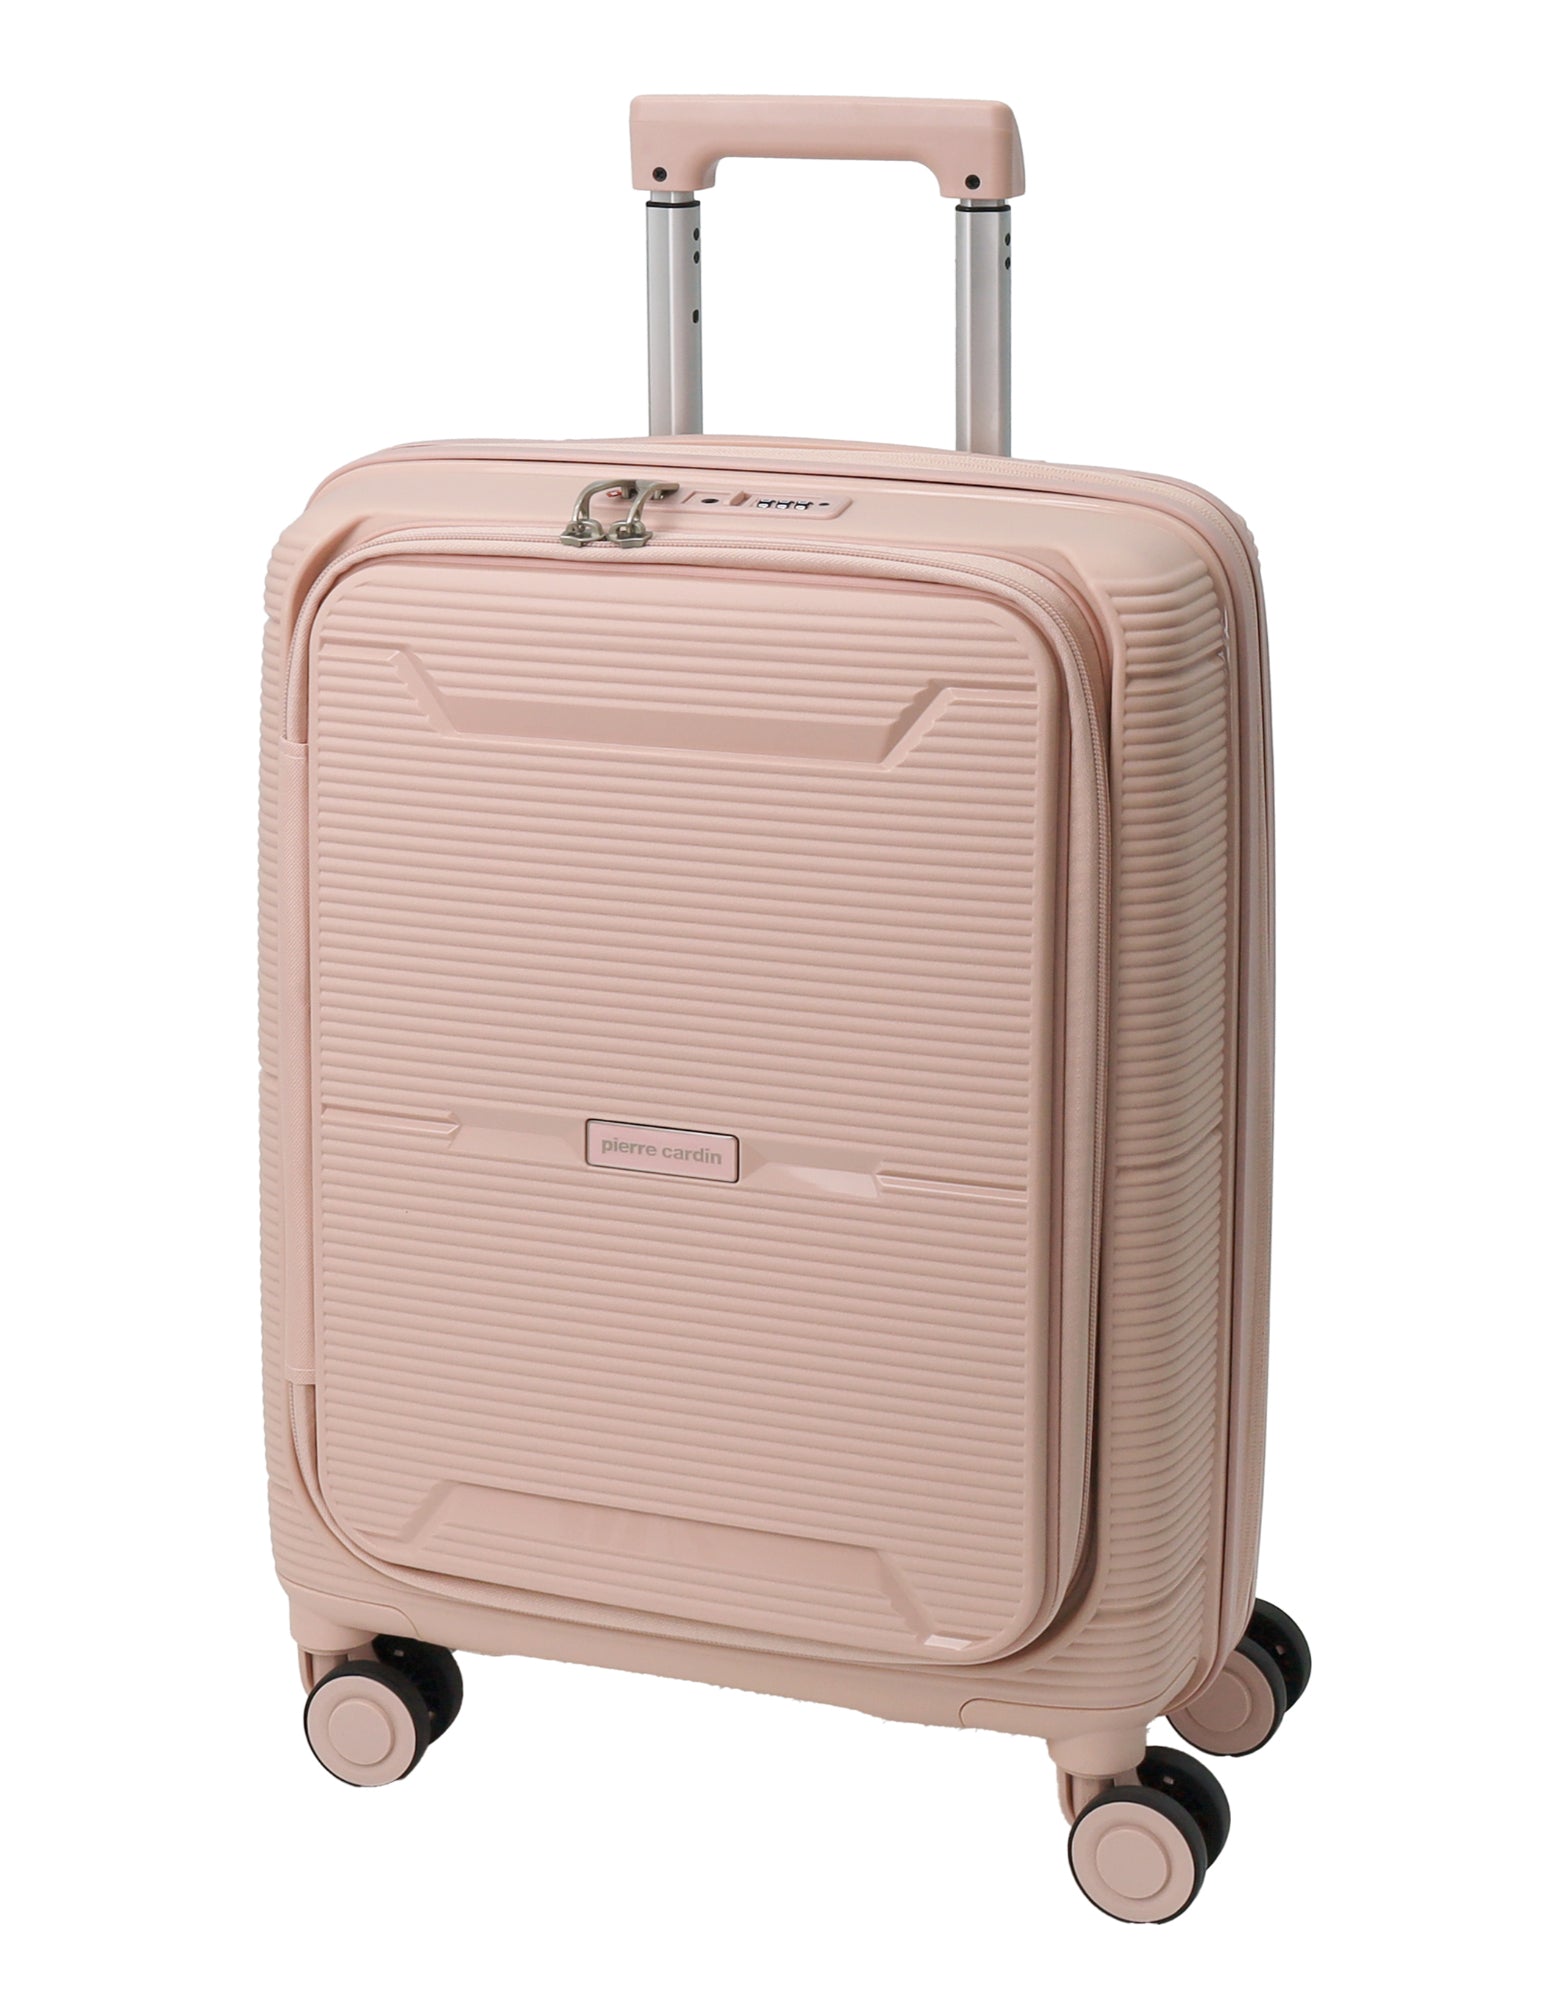 Pierre Cardin Hard-Shell 3-Piece Luggage Set in Blush